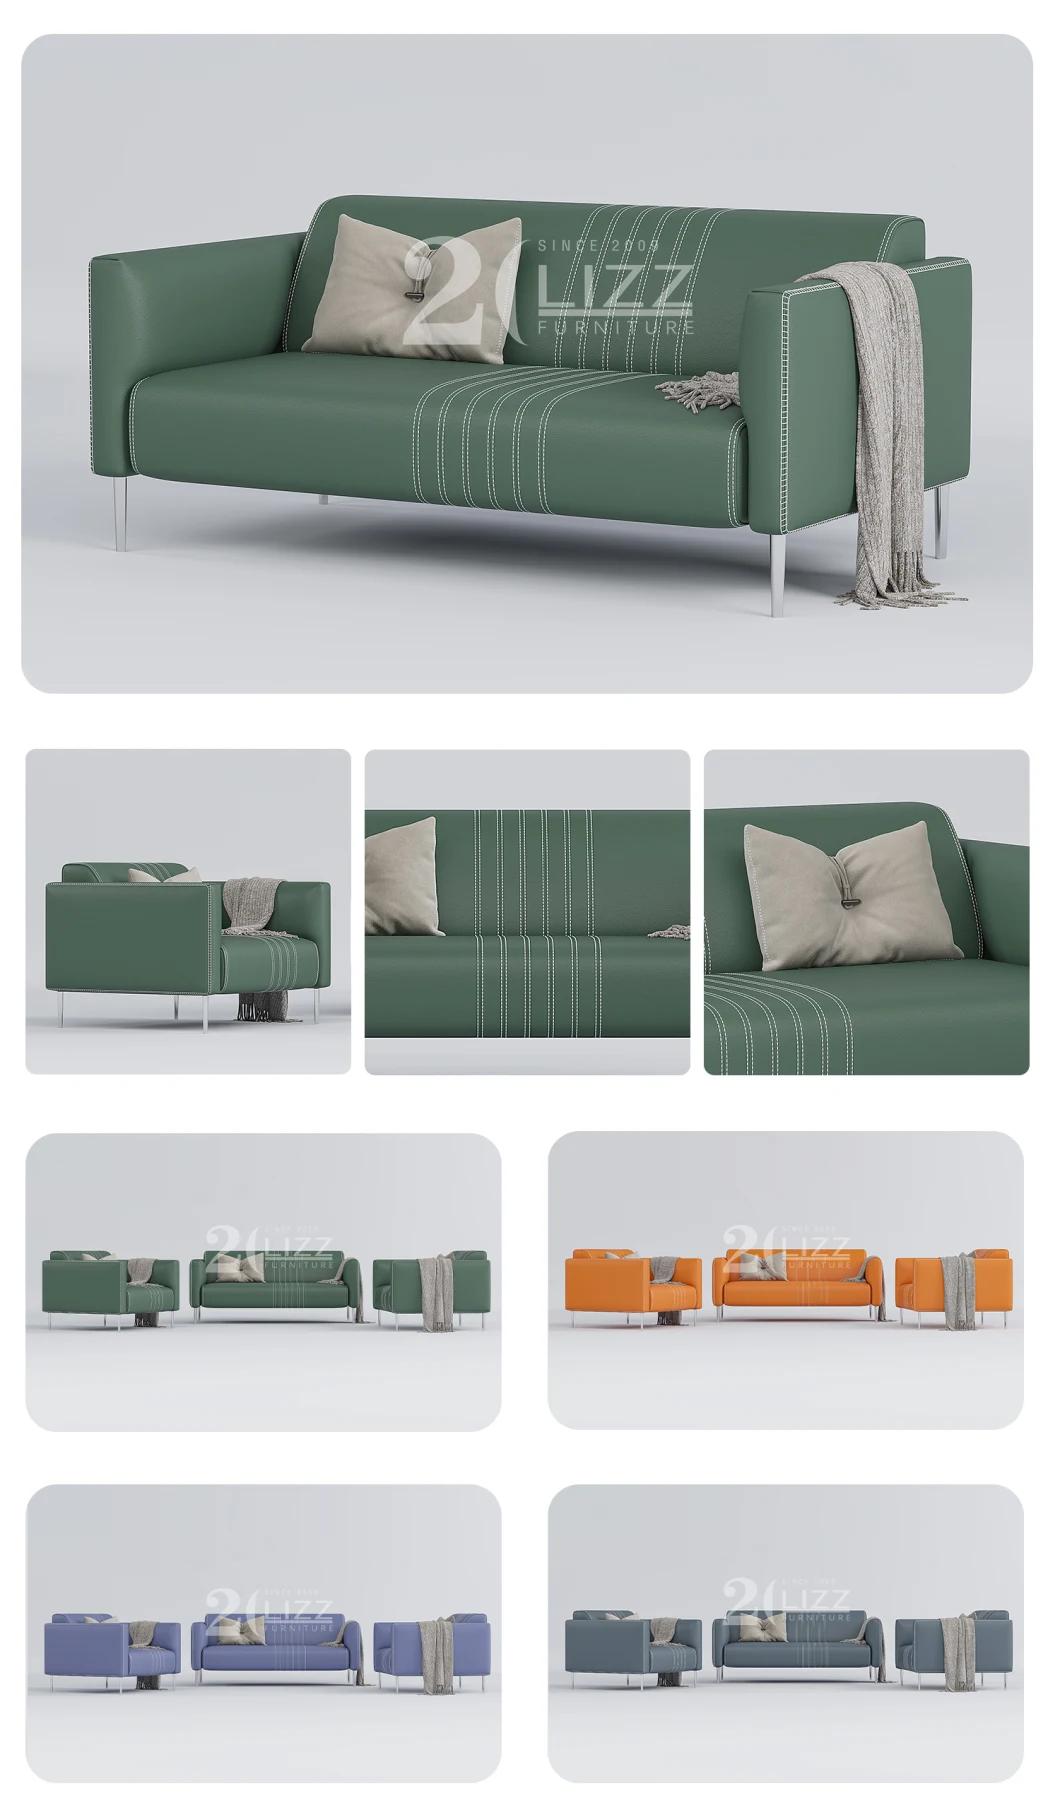 Modern Modular Silver Metaql Legs Living Room Sofa Furniture Luxury Italian Leather 1+2+3 Sofa